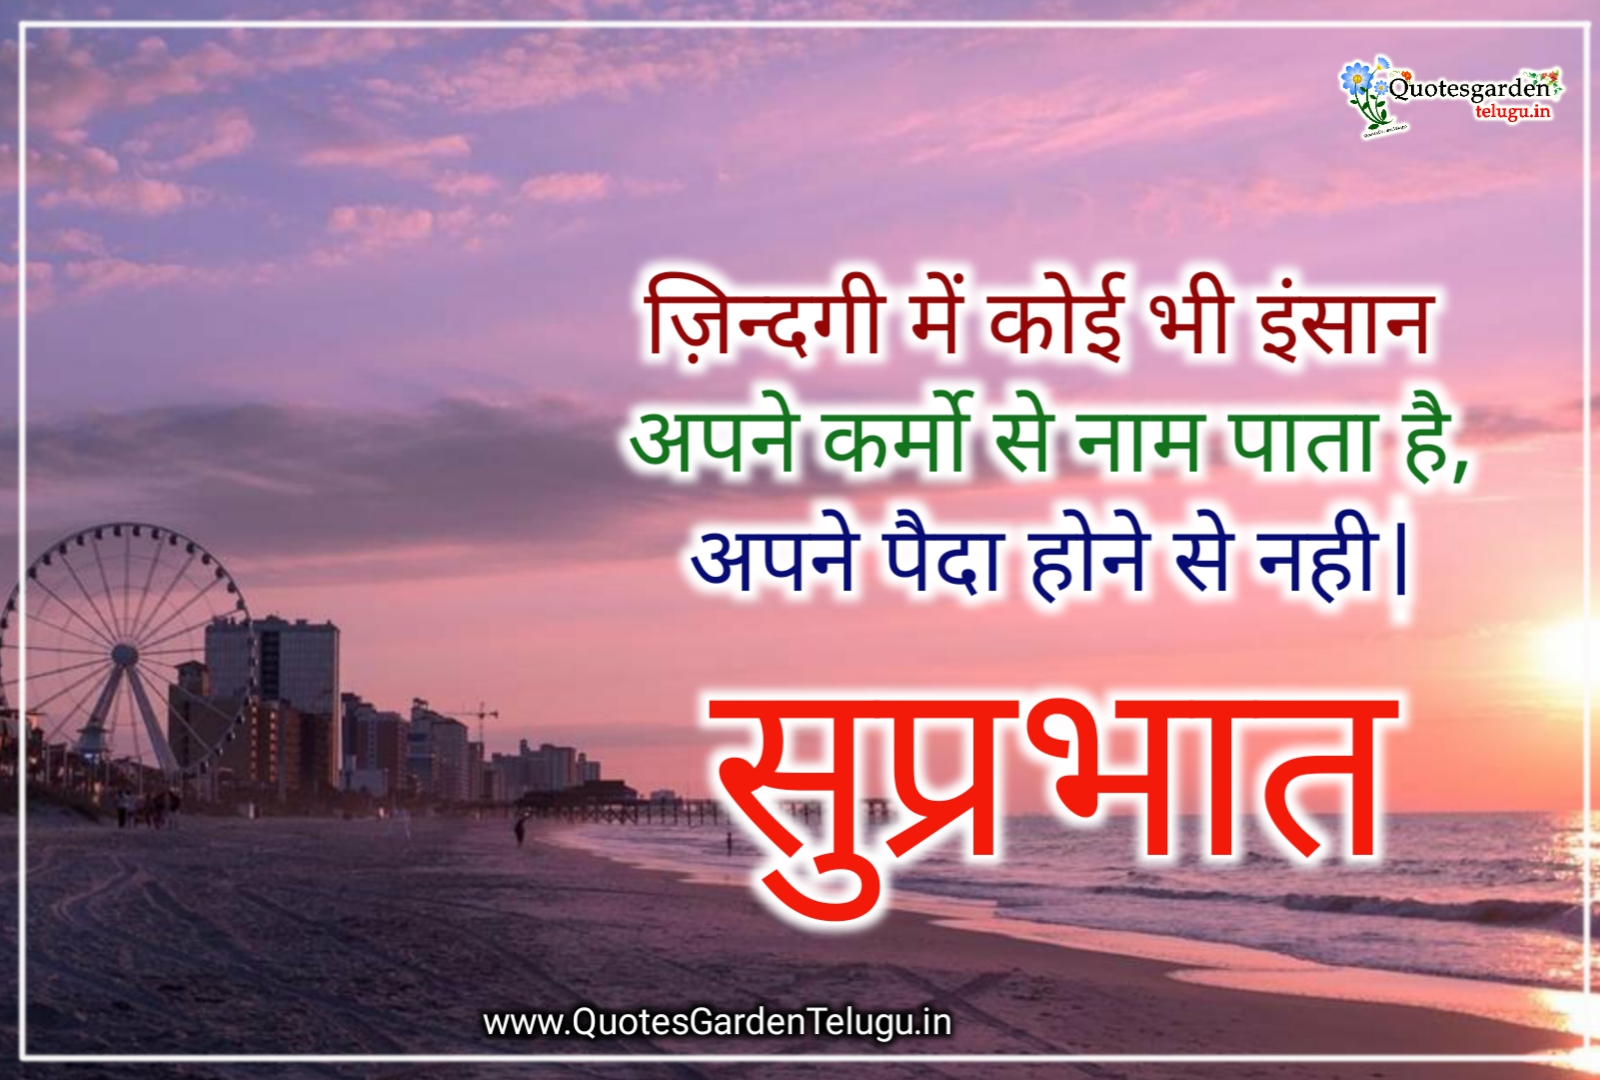 best motivational quotes in hindi shayari images free download | QUOTES  GARDEN TELUGU | Telugu Quotes | English Quotes | Hindi Quotes |